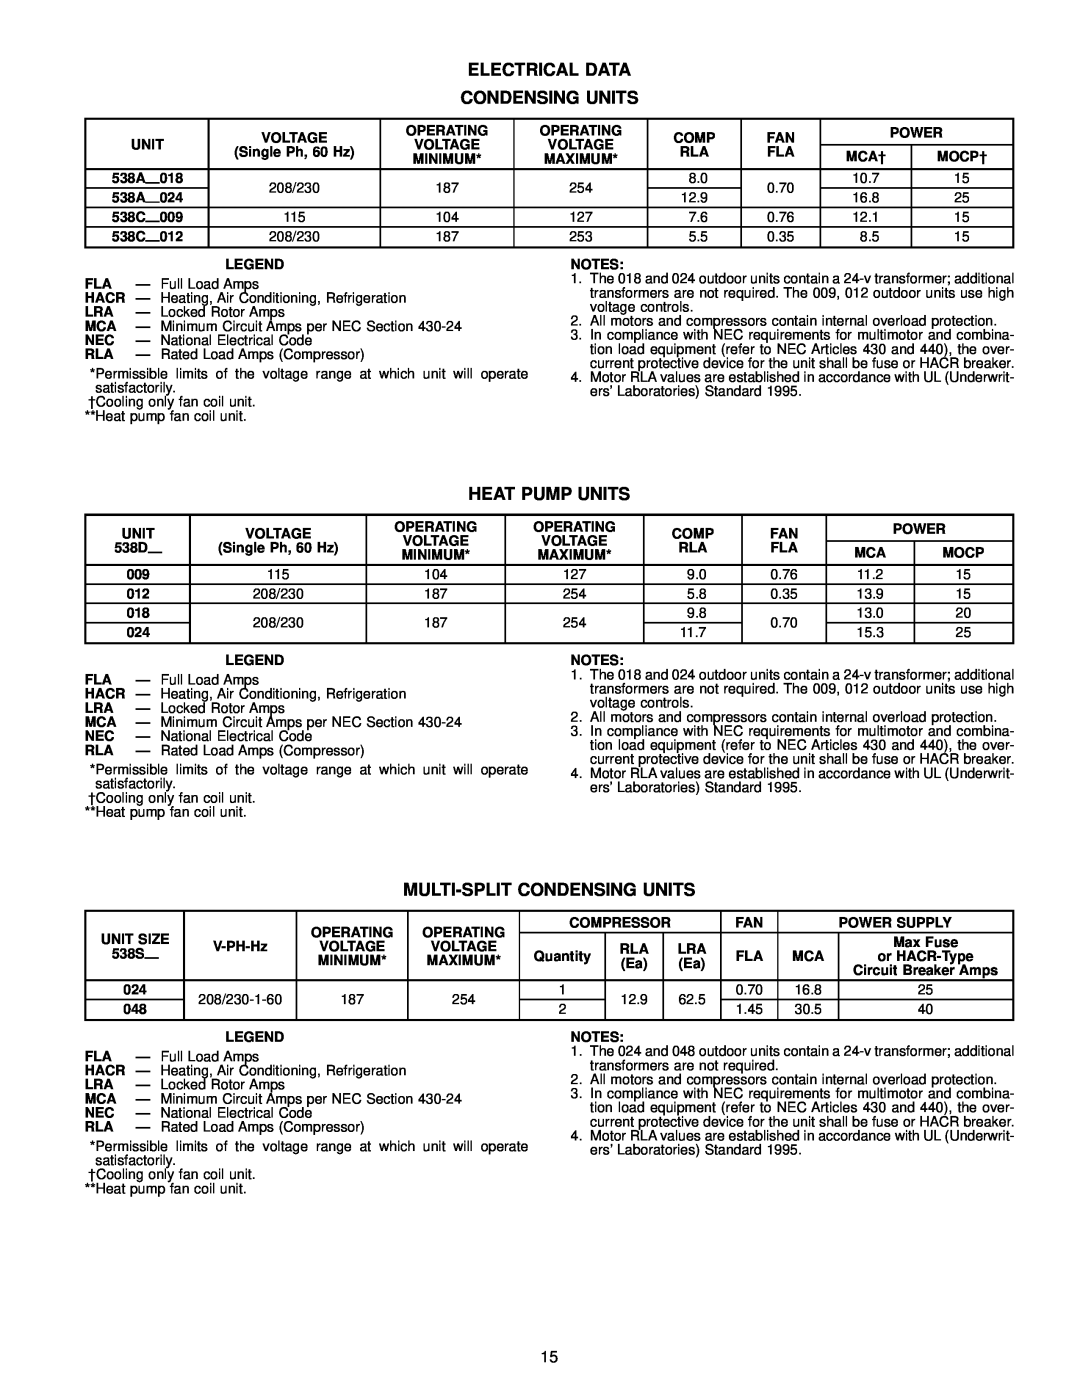 Bryant 619E manual Electrical Data Condensing Units, Heat Pump Units, Multi-Splitcondensing Units 